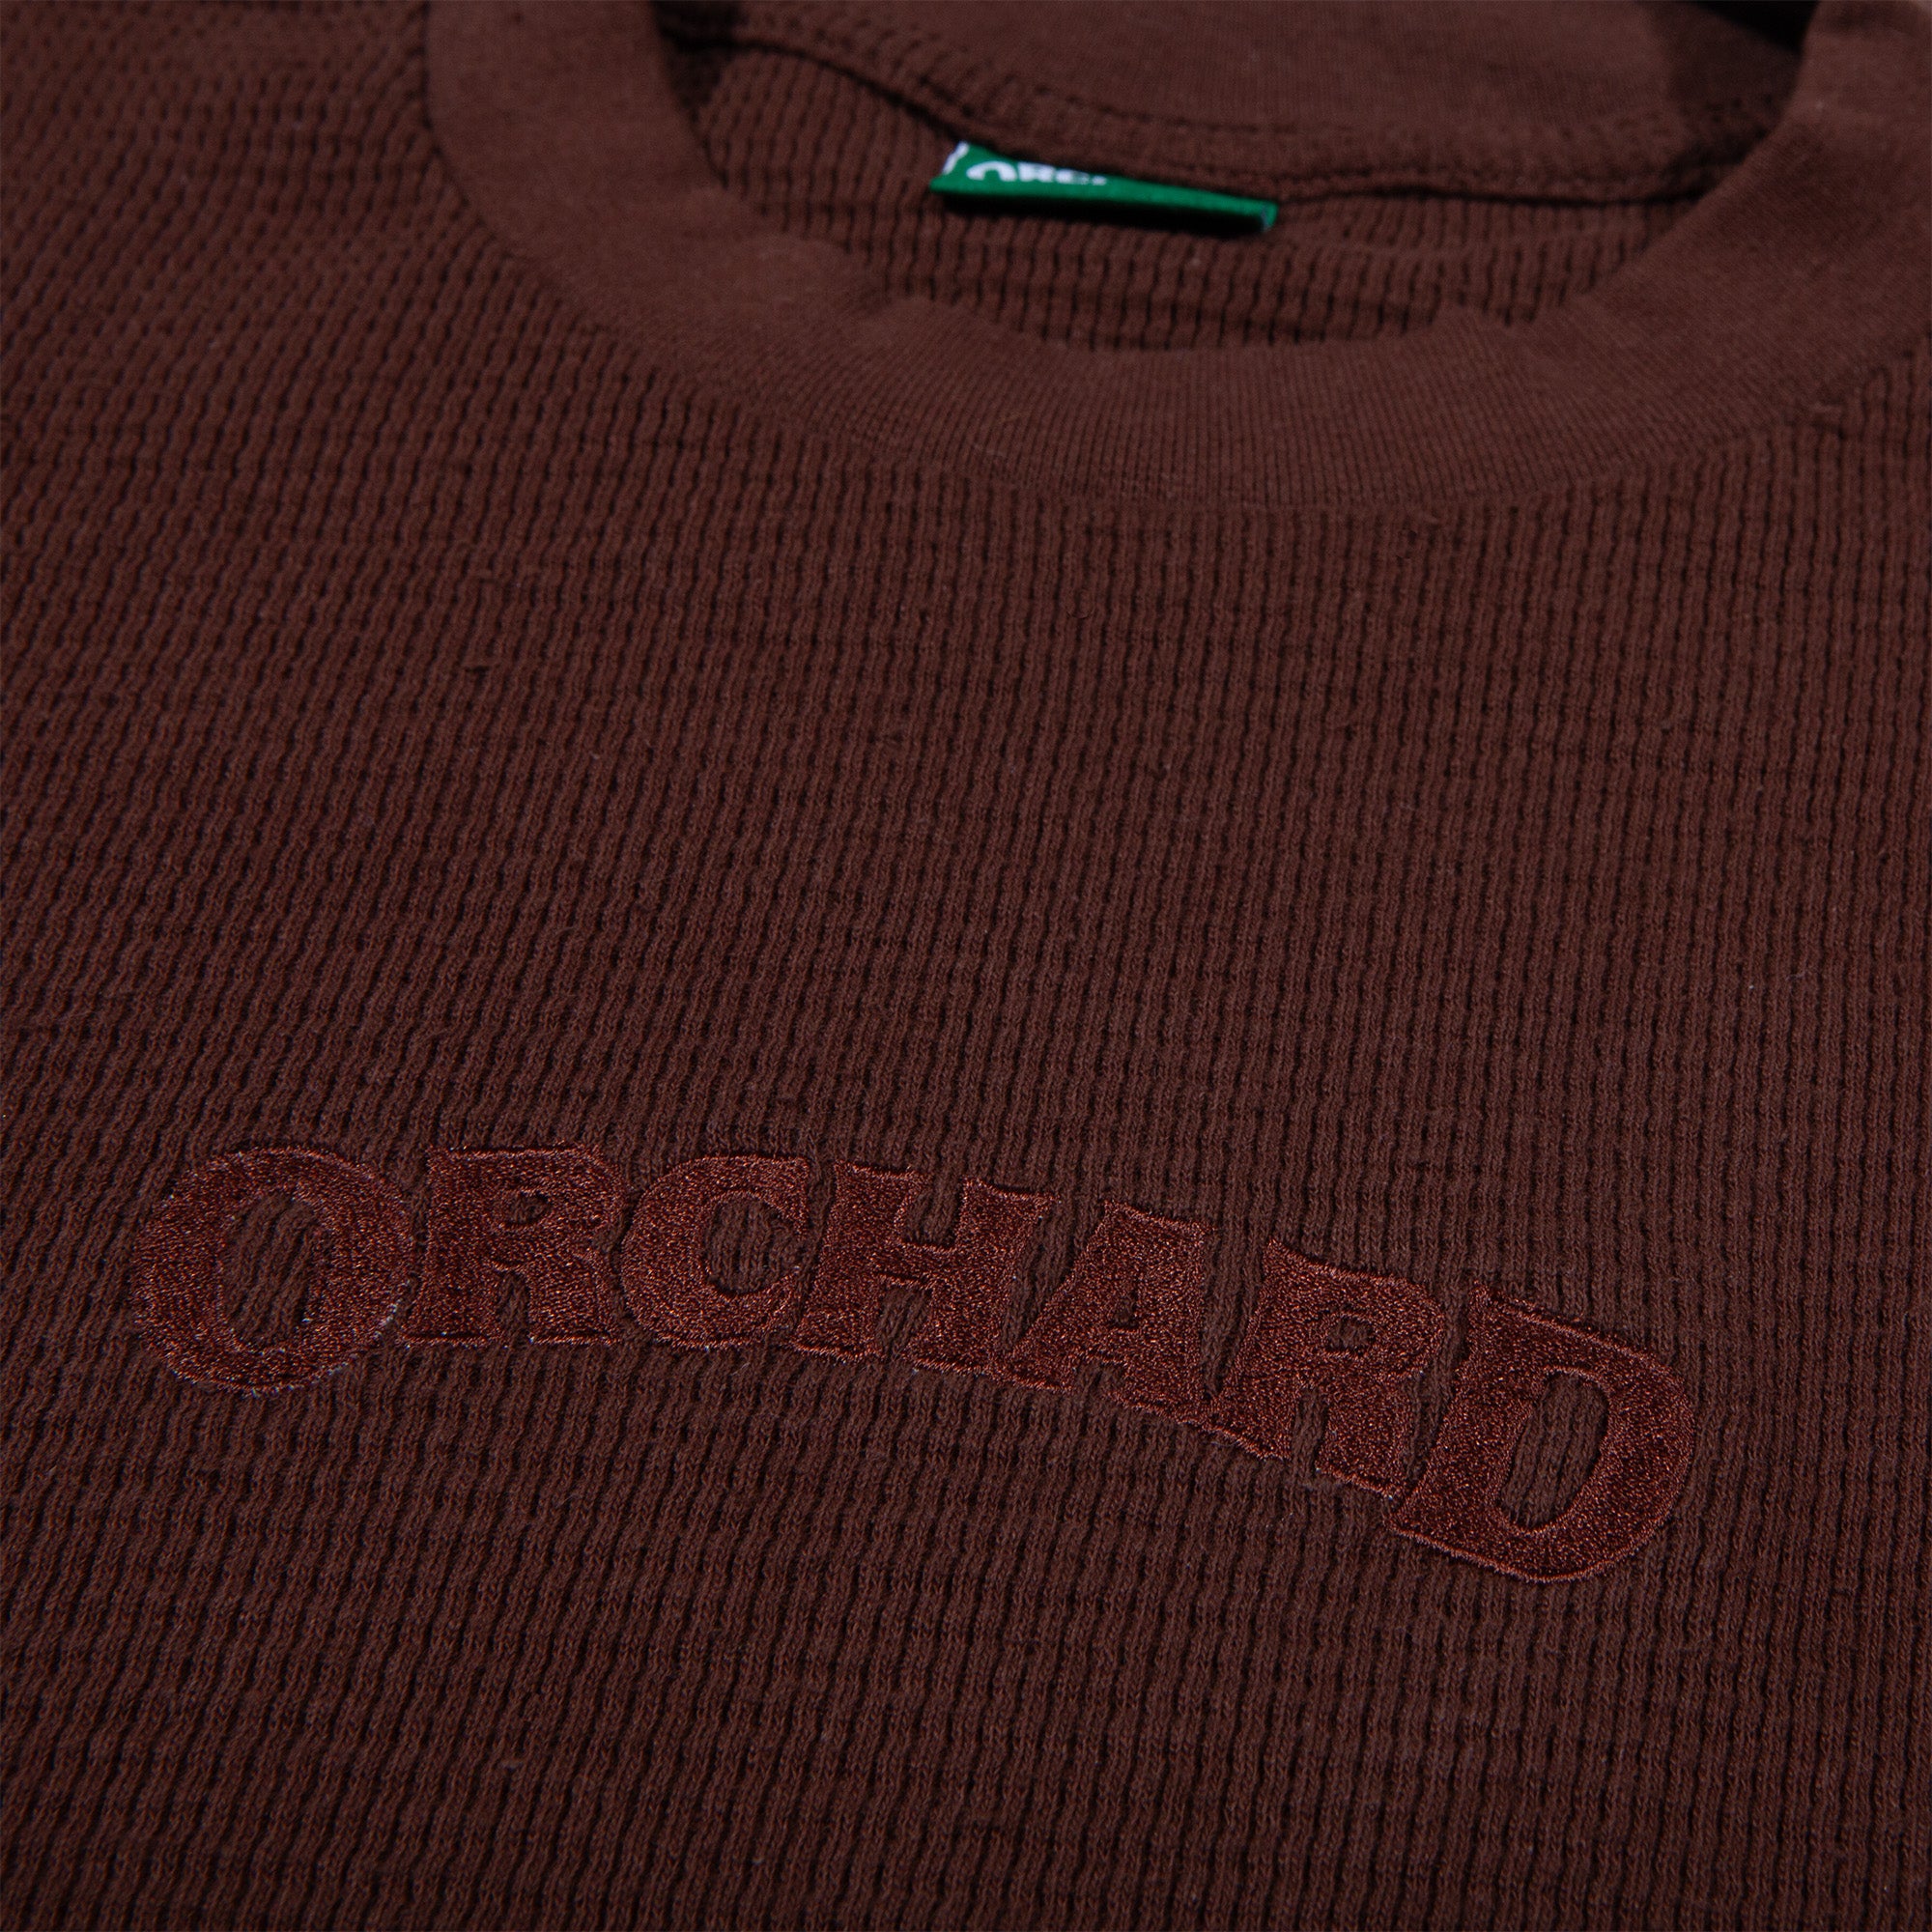 Orchard Emb Text Logo Thermal Shirt Chocolate/Chocolate